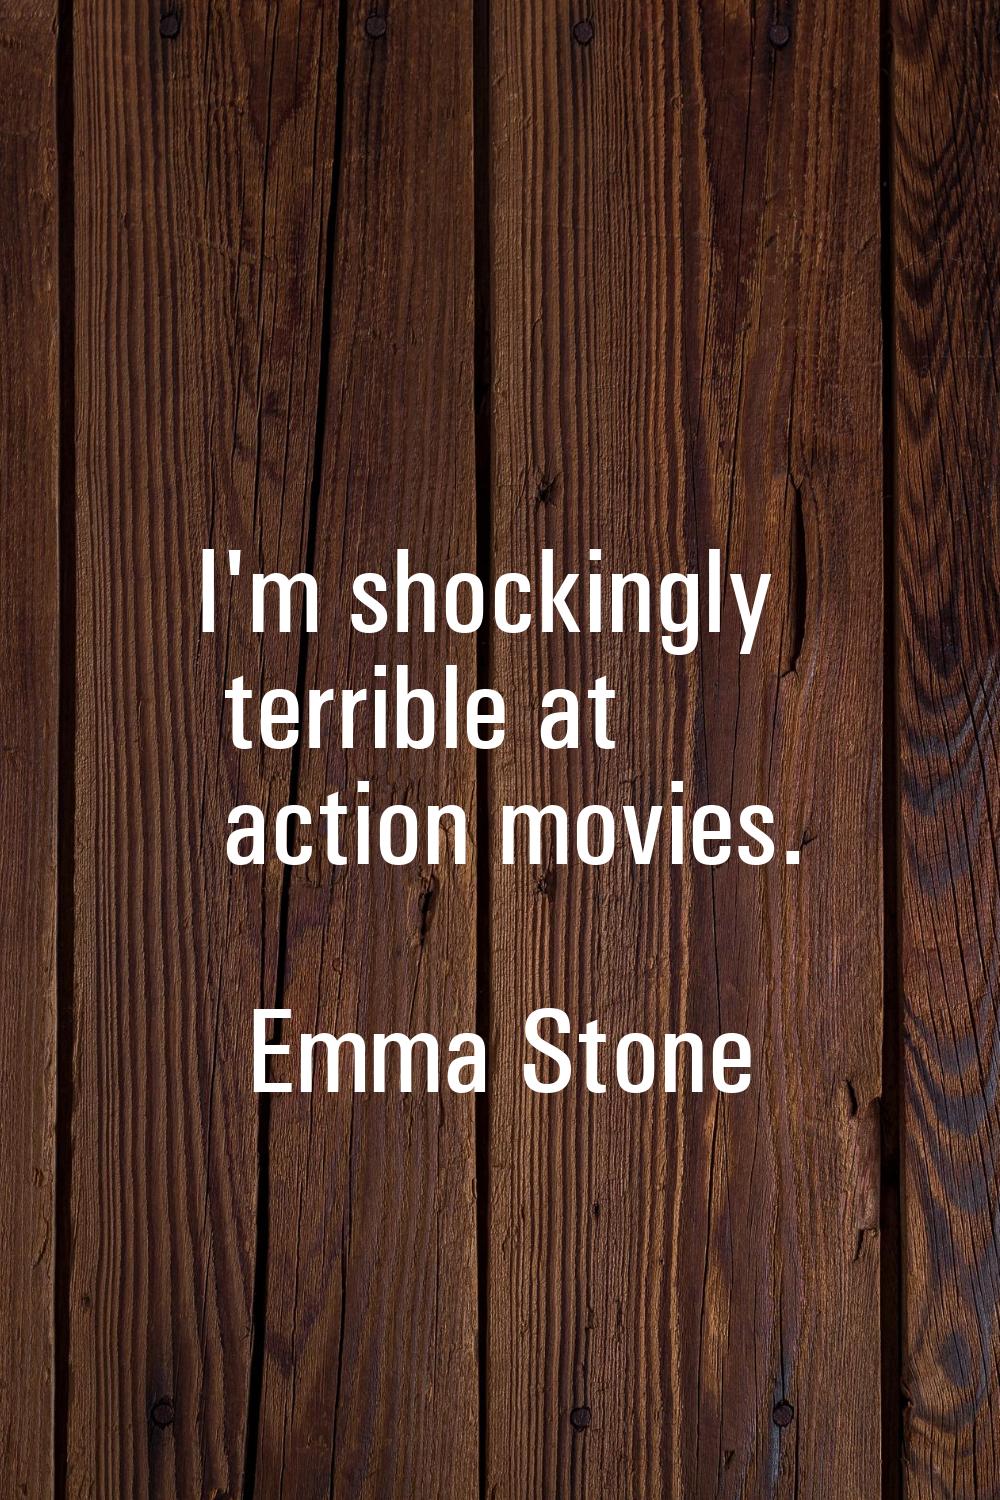 I'm shockingly terrible at action movies.